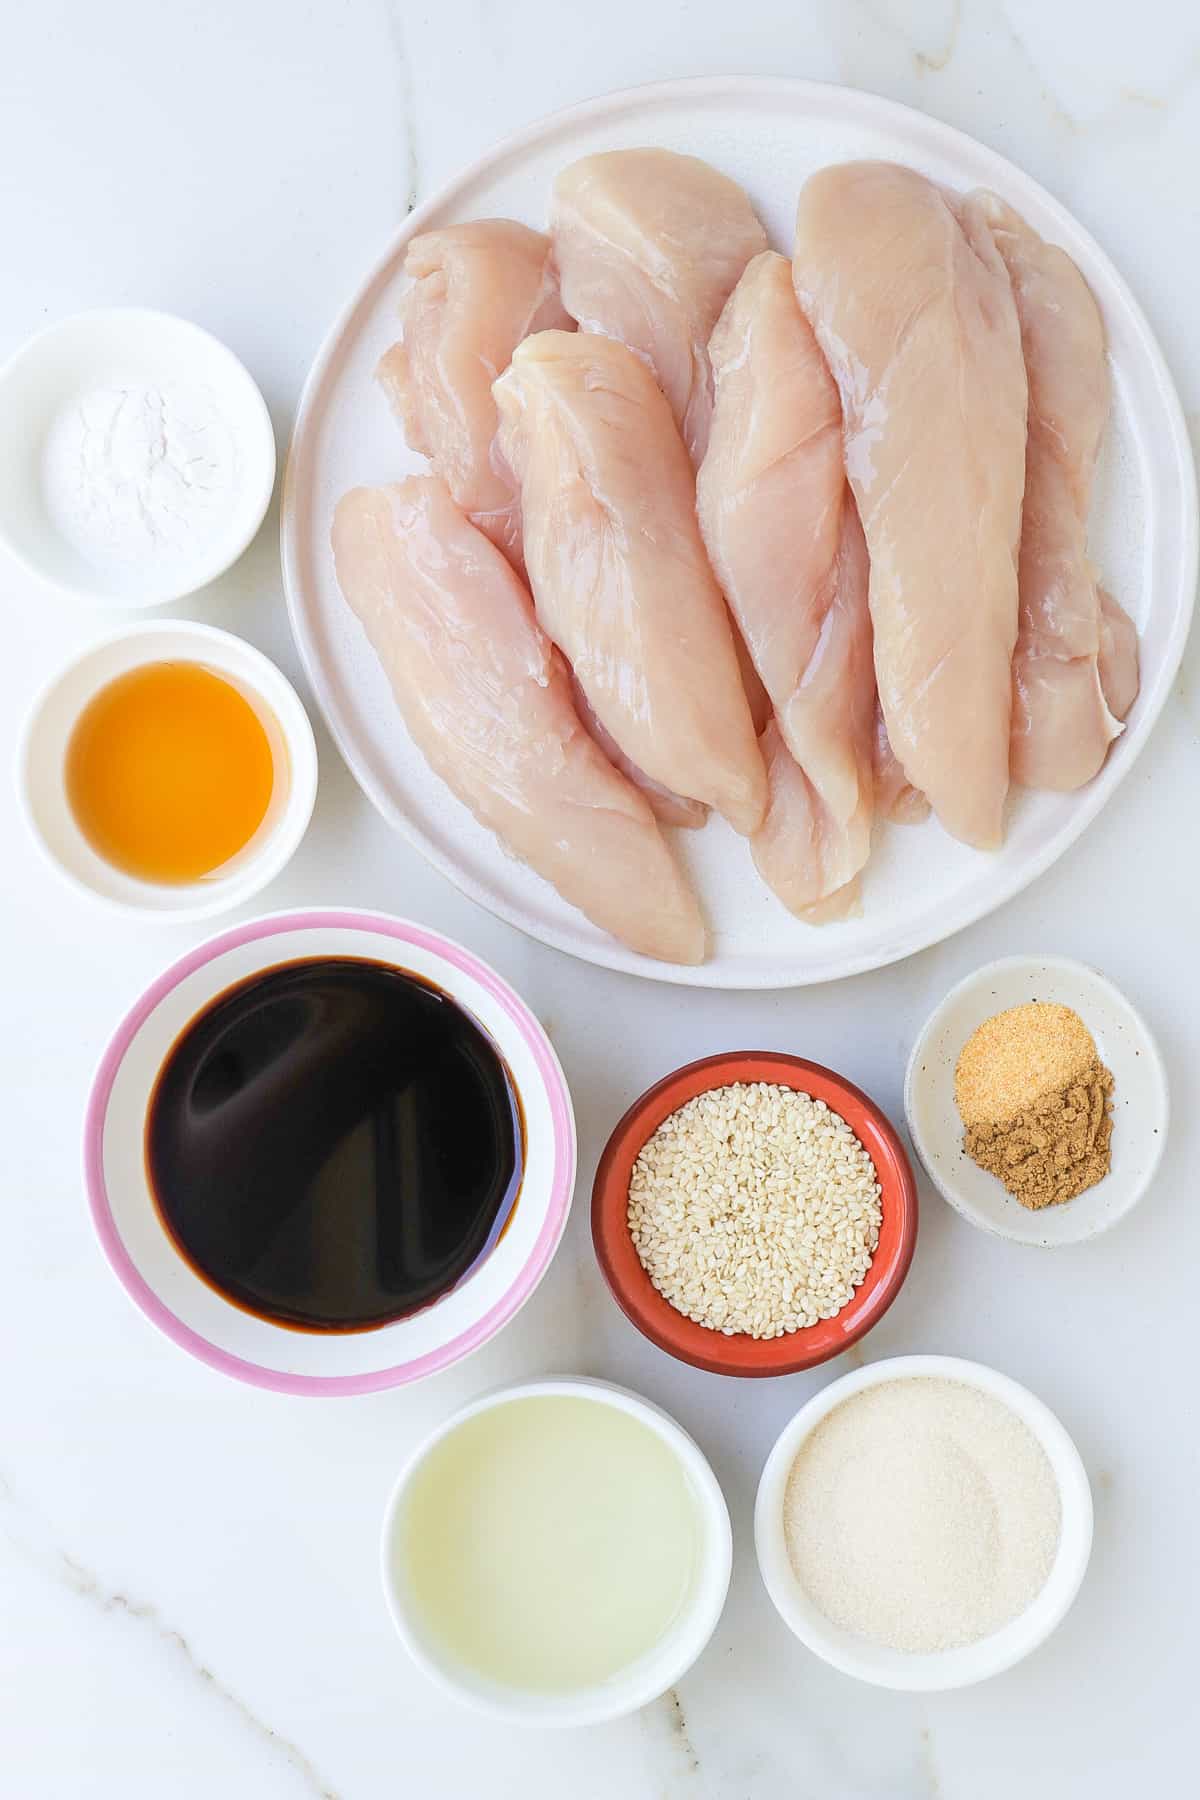 Ingredients shown to make teriyaki chicken.